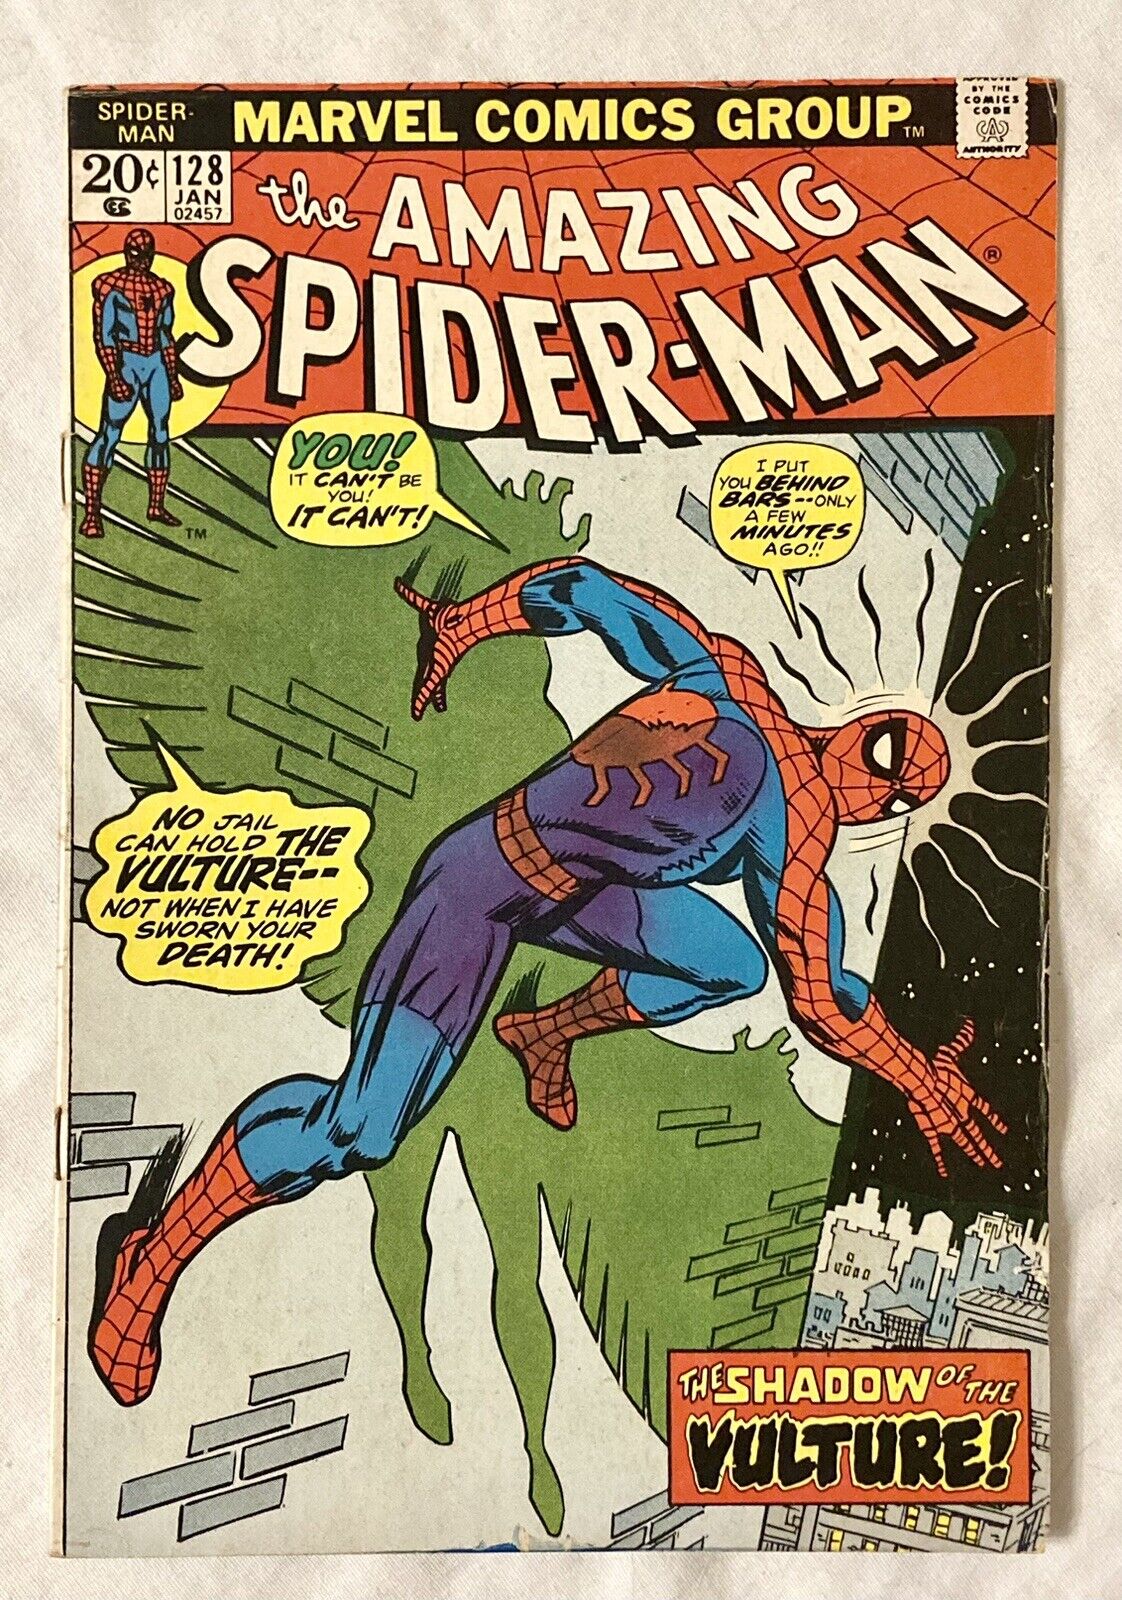 The Amazing Spider-Man #128 * Ungraded